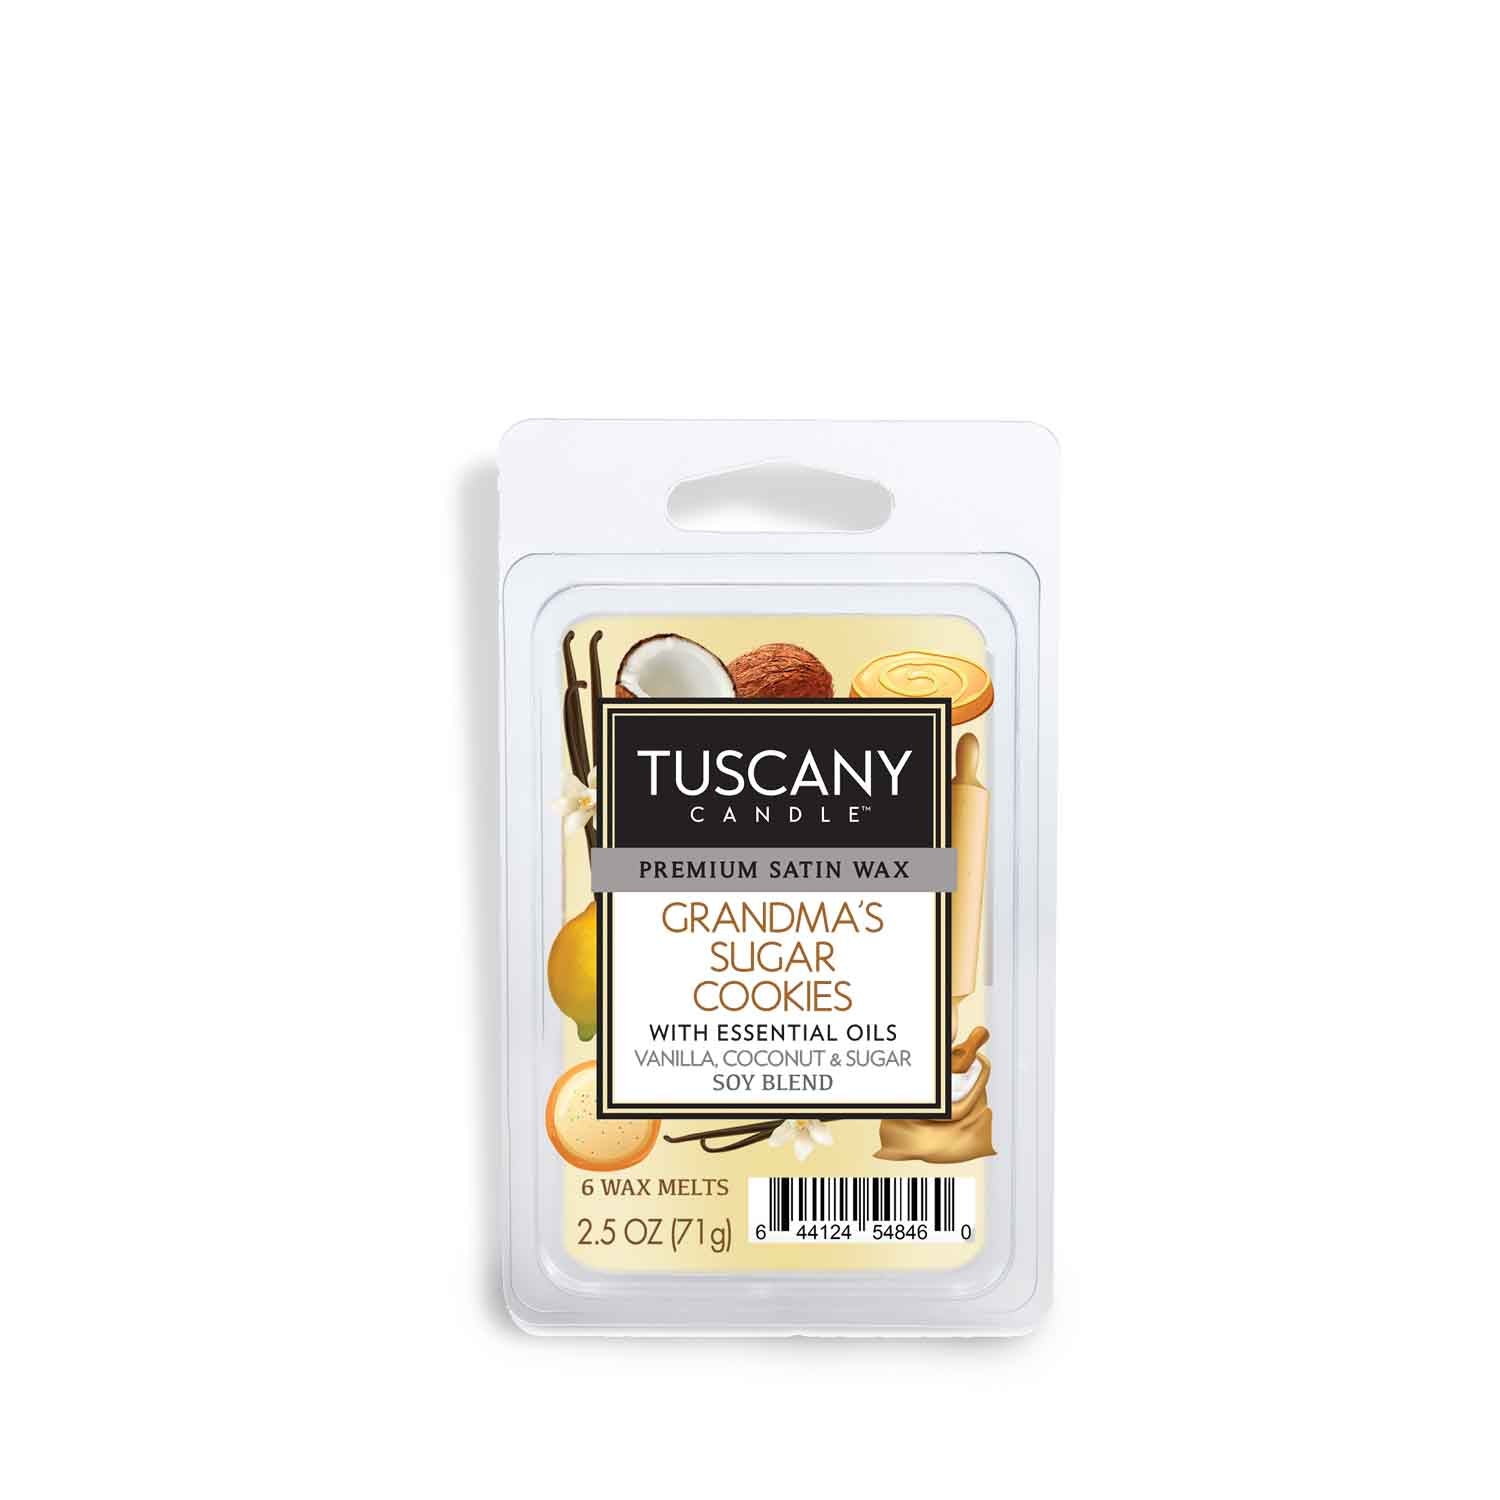 Tuscany Candle® Grandma's Sugar Cookies Scented Wax Melt (2.5 oz)